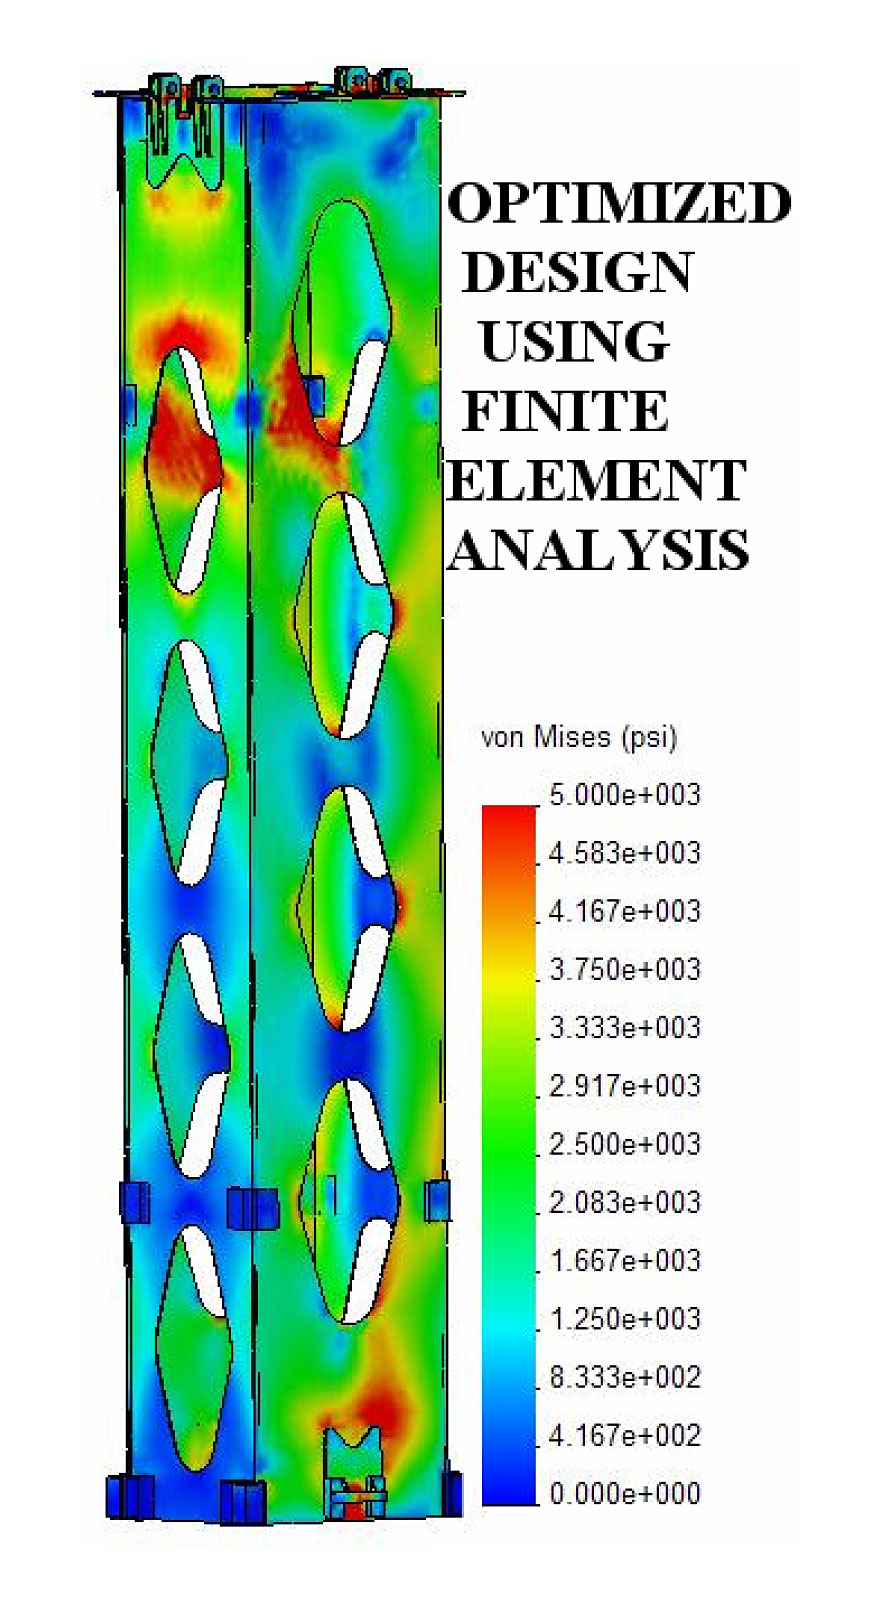 TL50 has optimized design using Finite eement Analysis